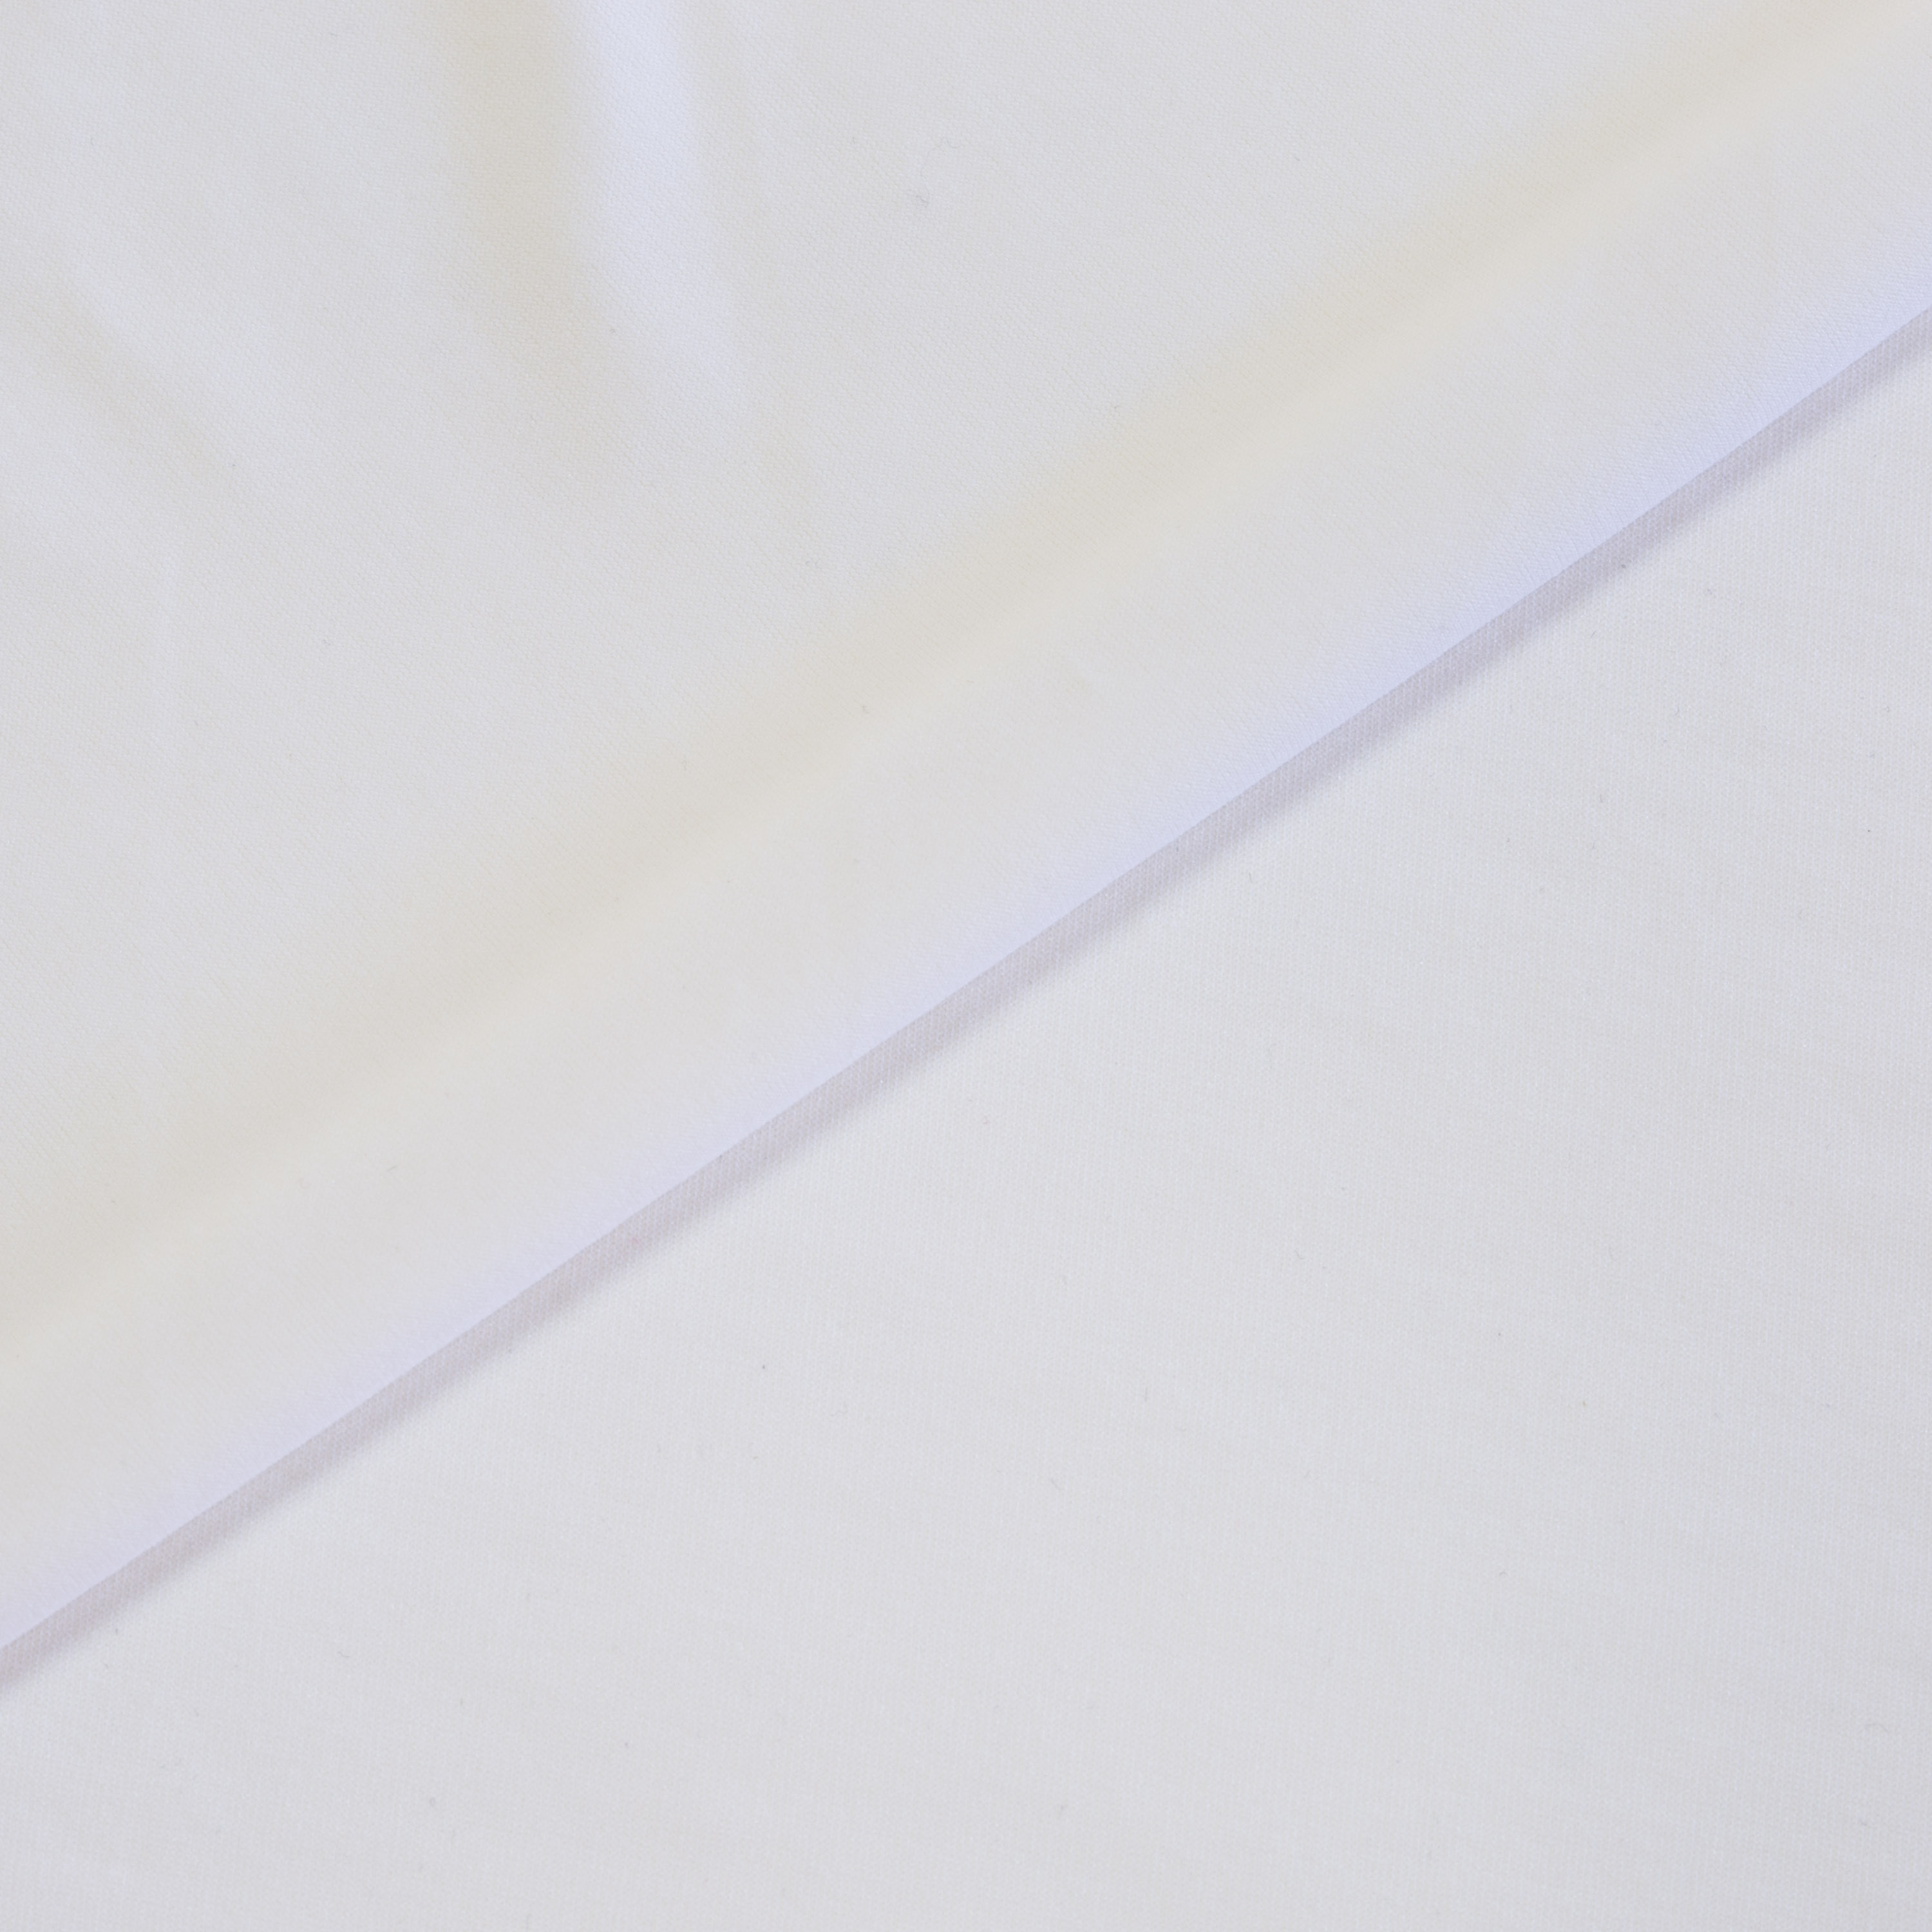 swimwear lining fabric FL-6 white from Bra-Makers Supply folded shown